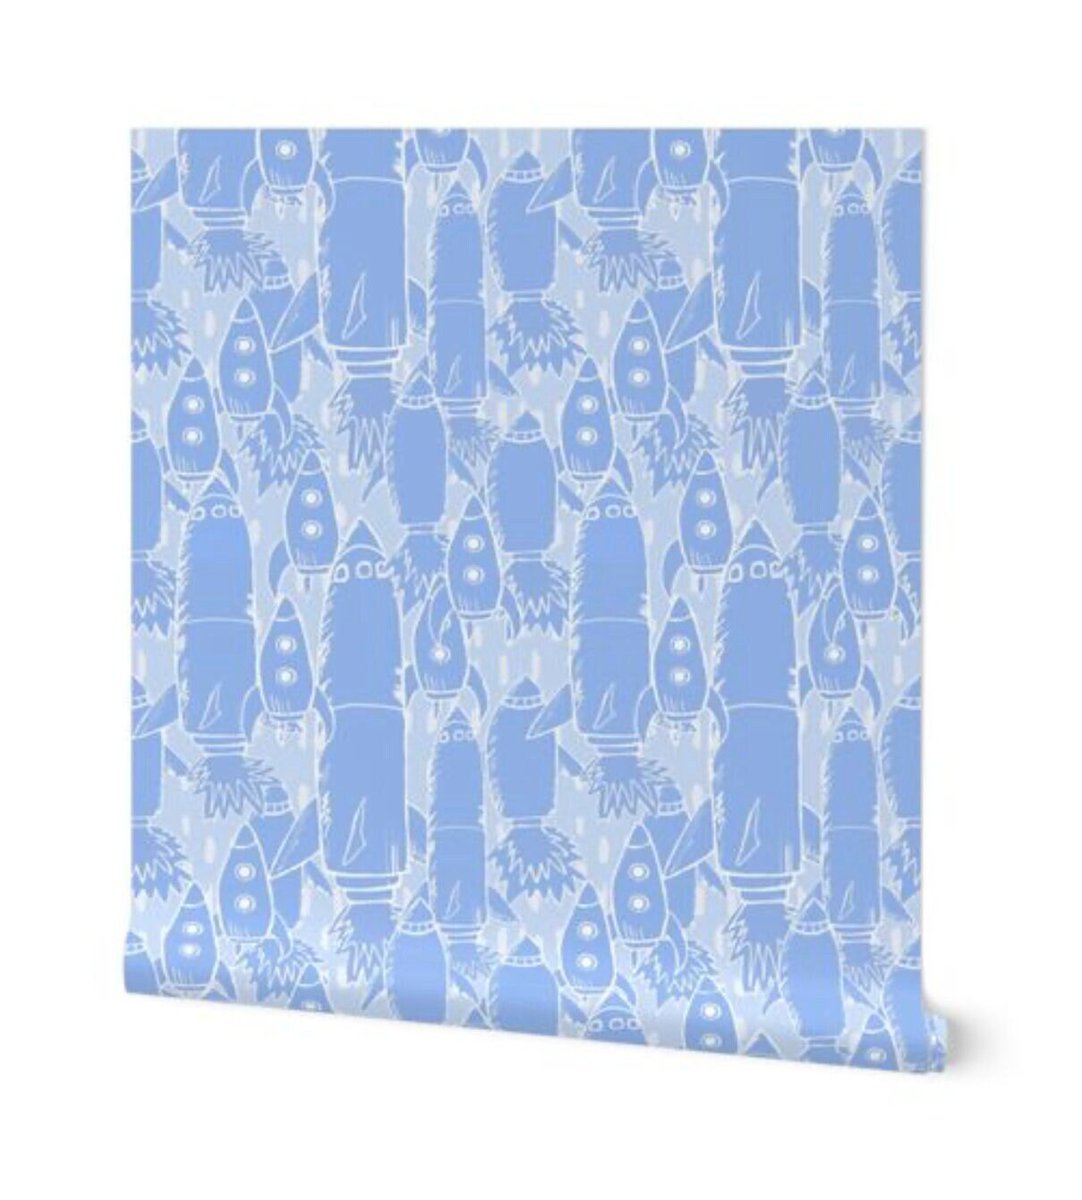 NEW Rocket Baby Blue Wallpaper etsy.me/40gCwdl #blue  #white #space #spacetravel #interiordesign #rocketman #rockets #kidsroom #babynursery  #peelstick #wallpaper